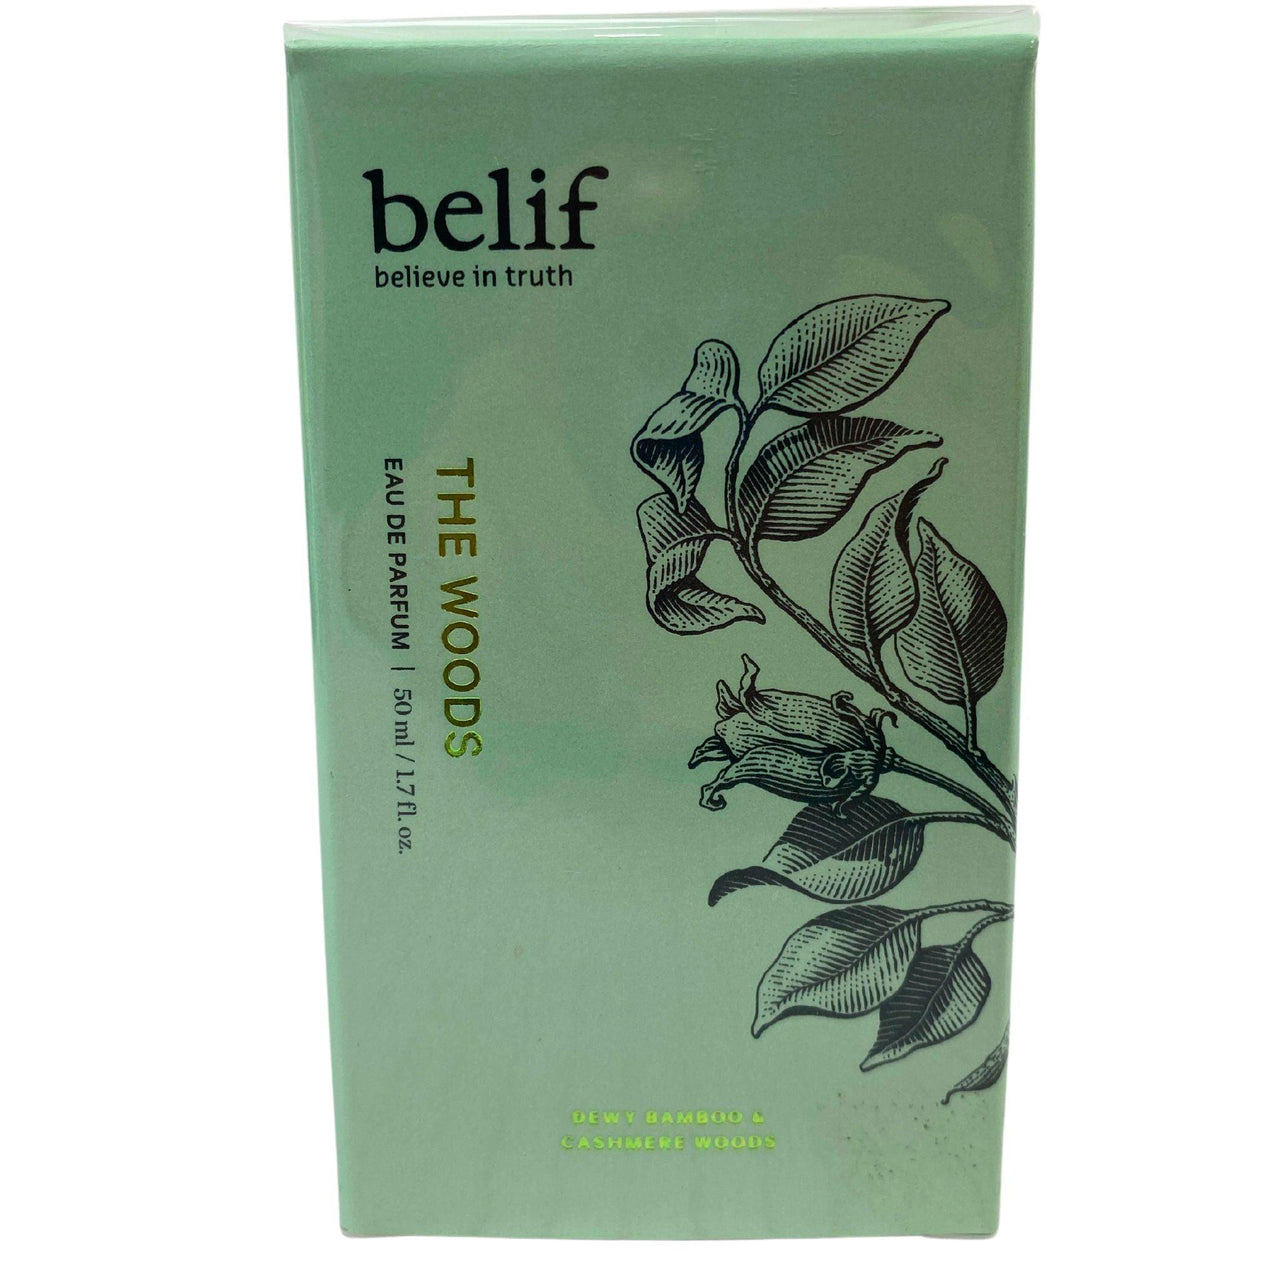 Belif Believe In Truth The Woods Eau De Parfum 1.7OZ Dewy Bamboo & Cashmere Woods (48 Pcs Lot) - Discount Wholesalers Inc